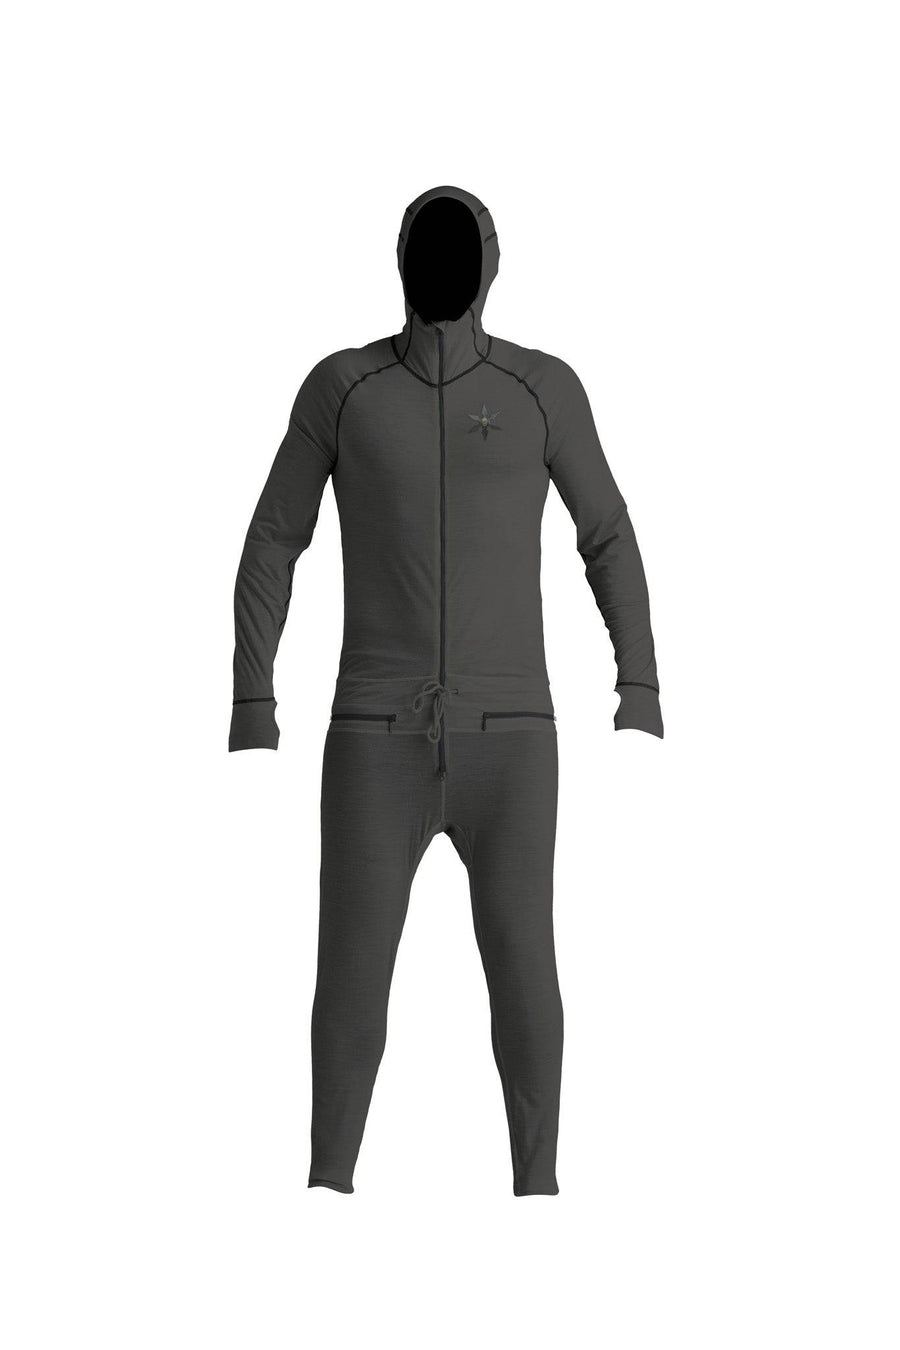 Airblaster Merino Ninja Suit in Black 2023